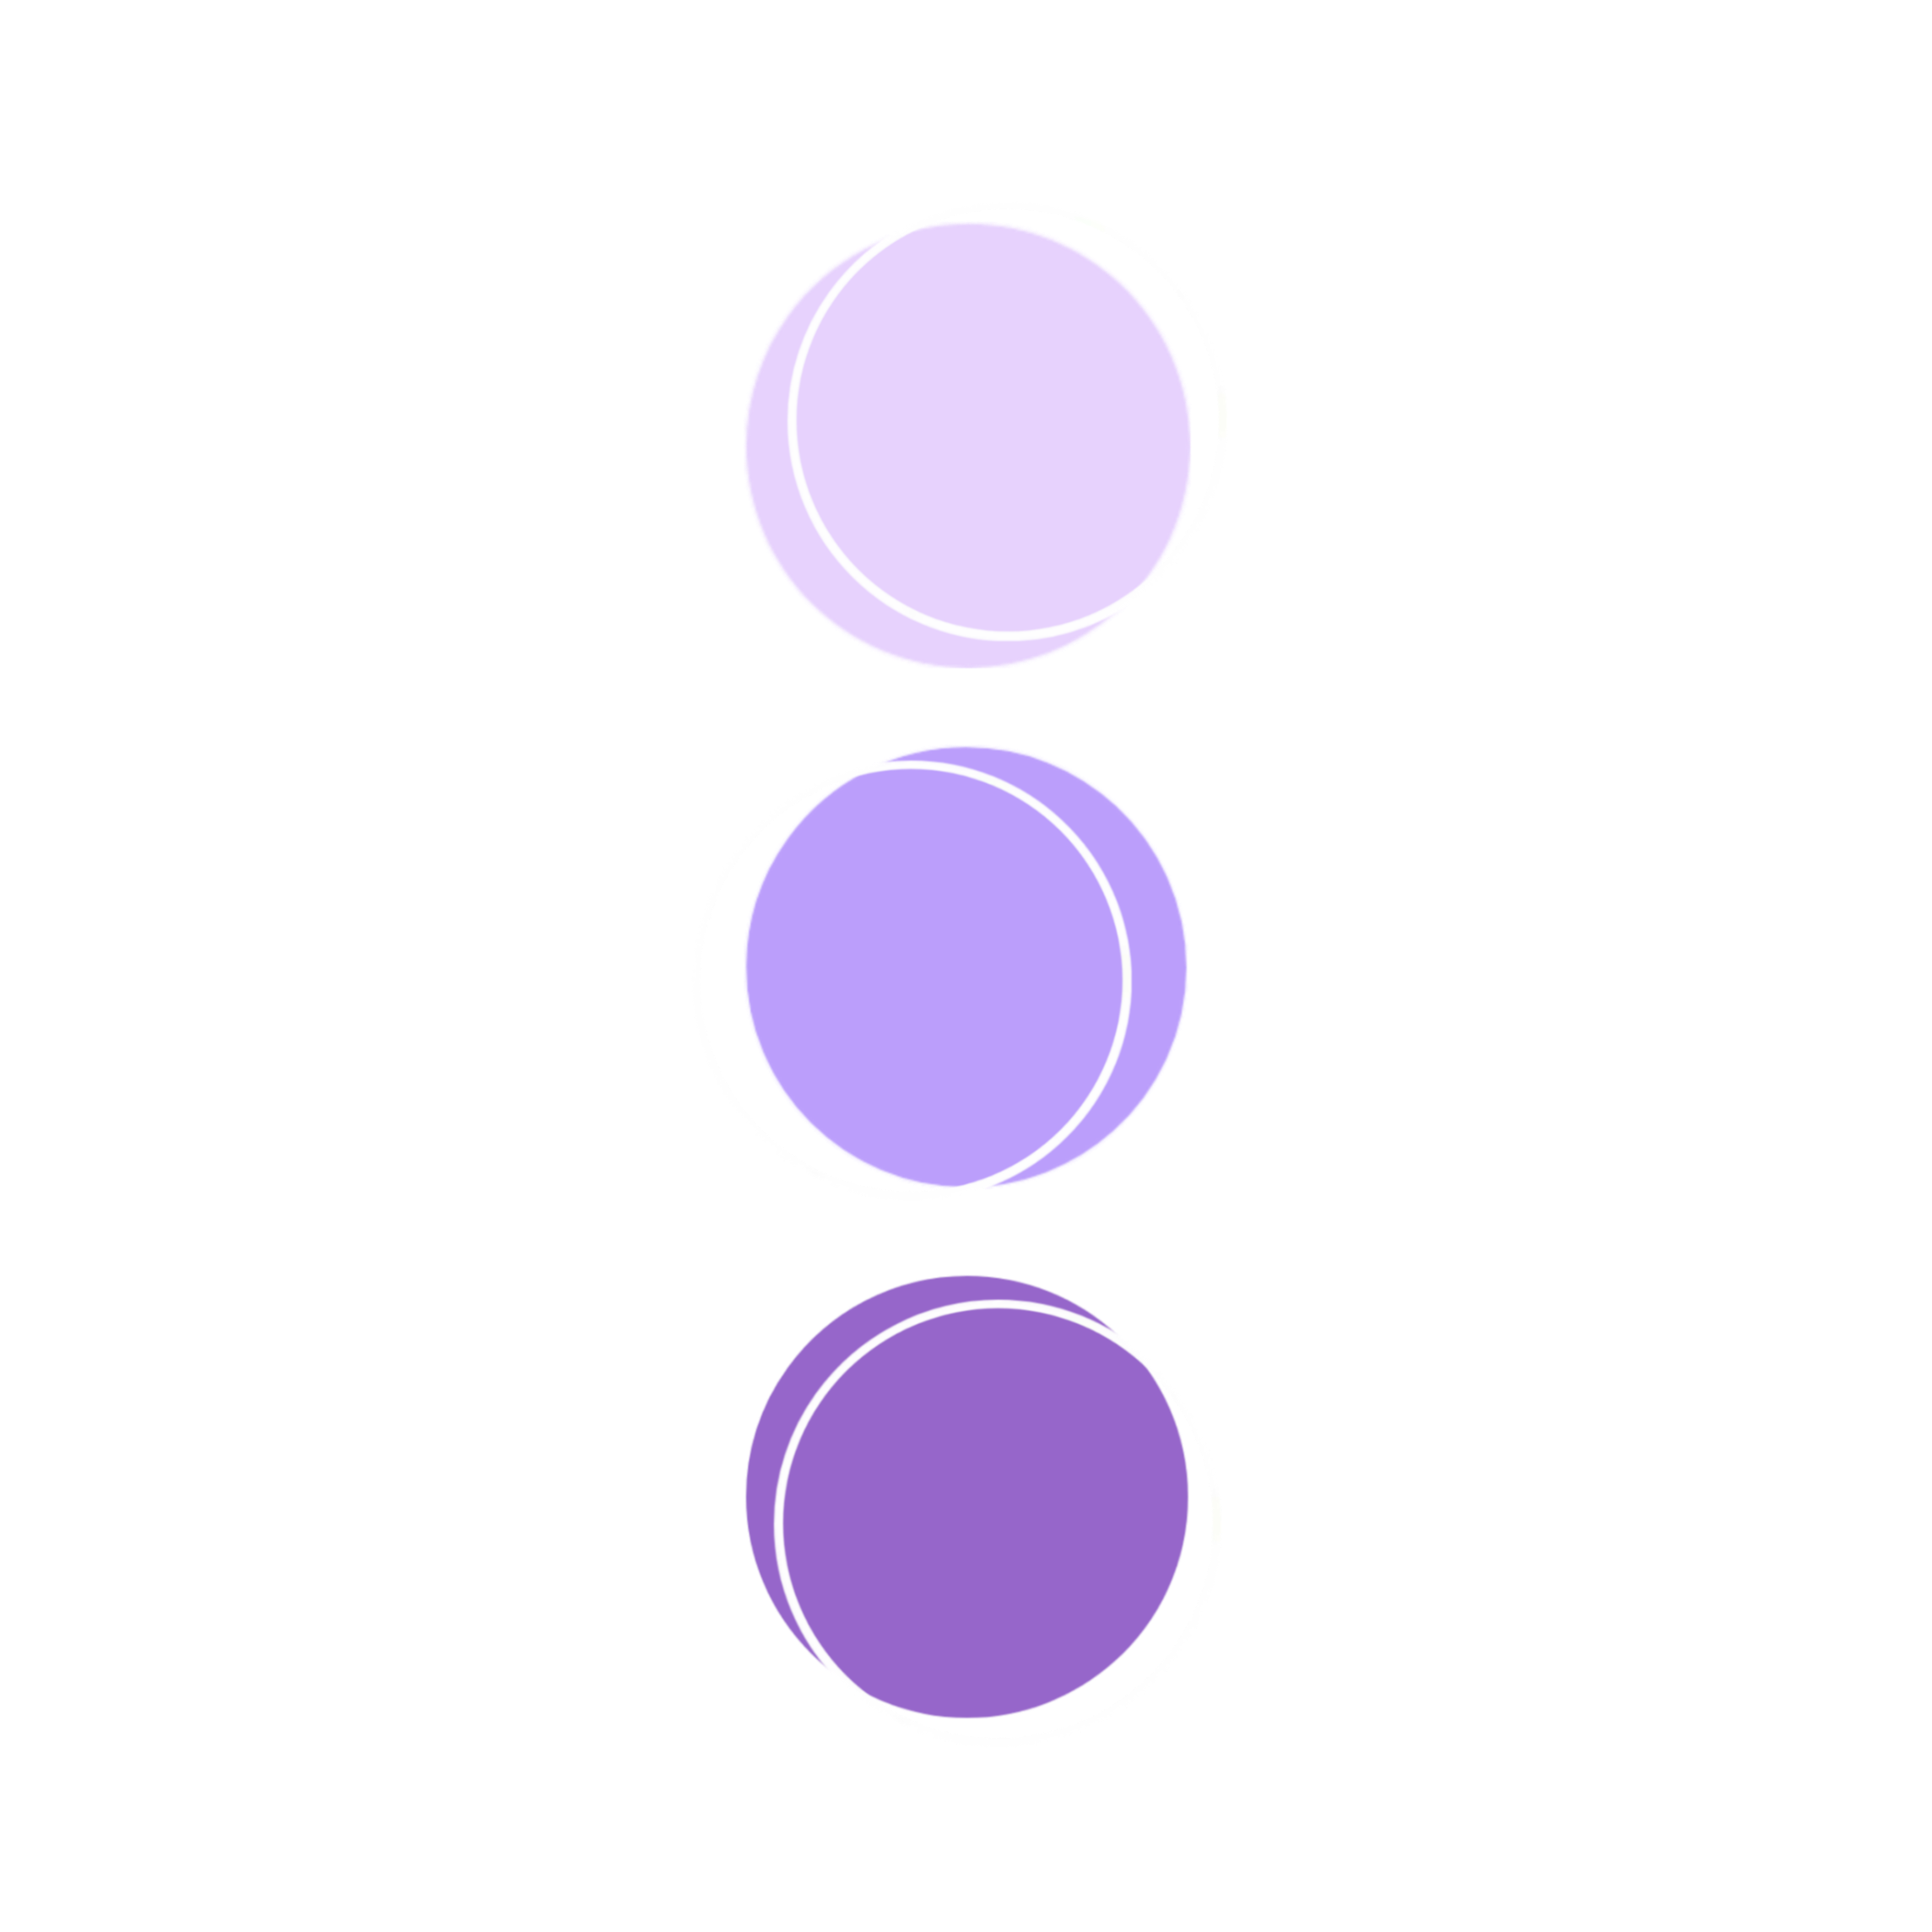 freetoedit purples circles sticker by @kristalfrancinebrown.